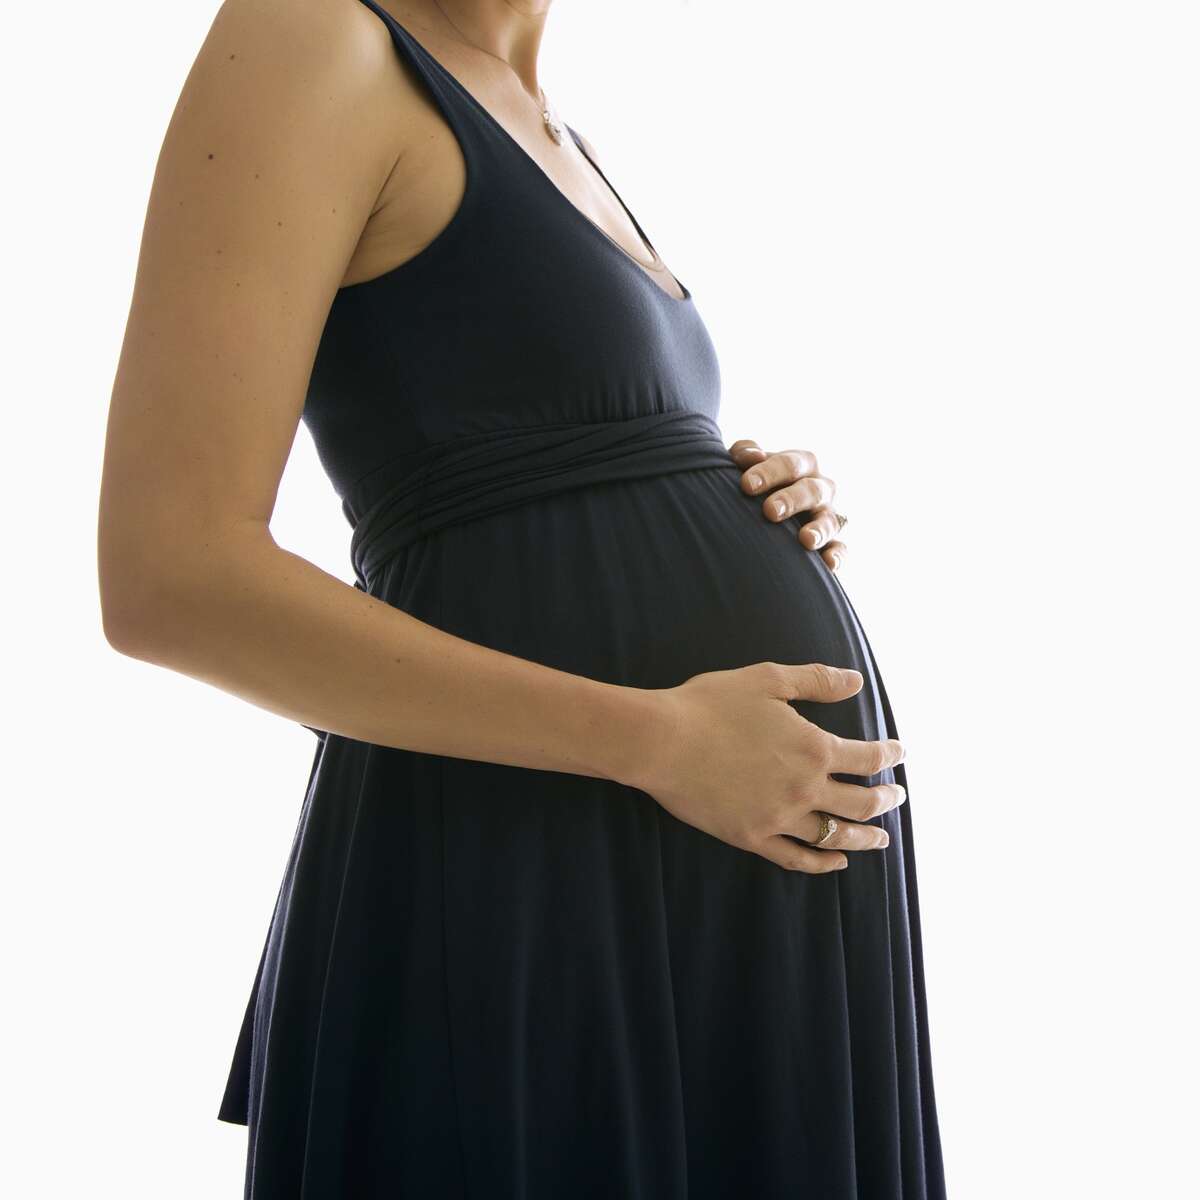 Studies show that smoking marijuana during pregnancy ﻿can be dangerous for the fetus﻿.﻿